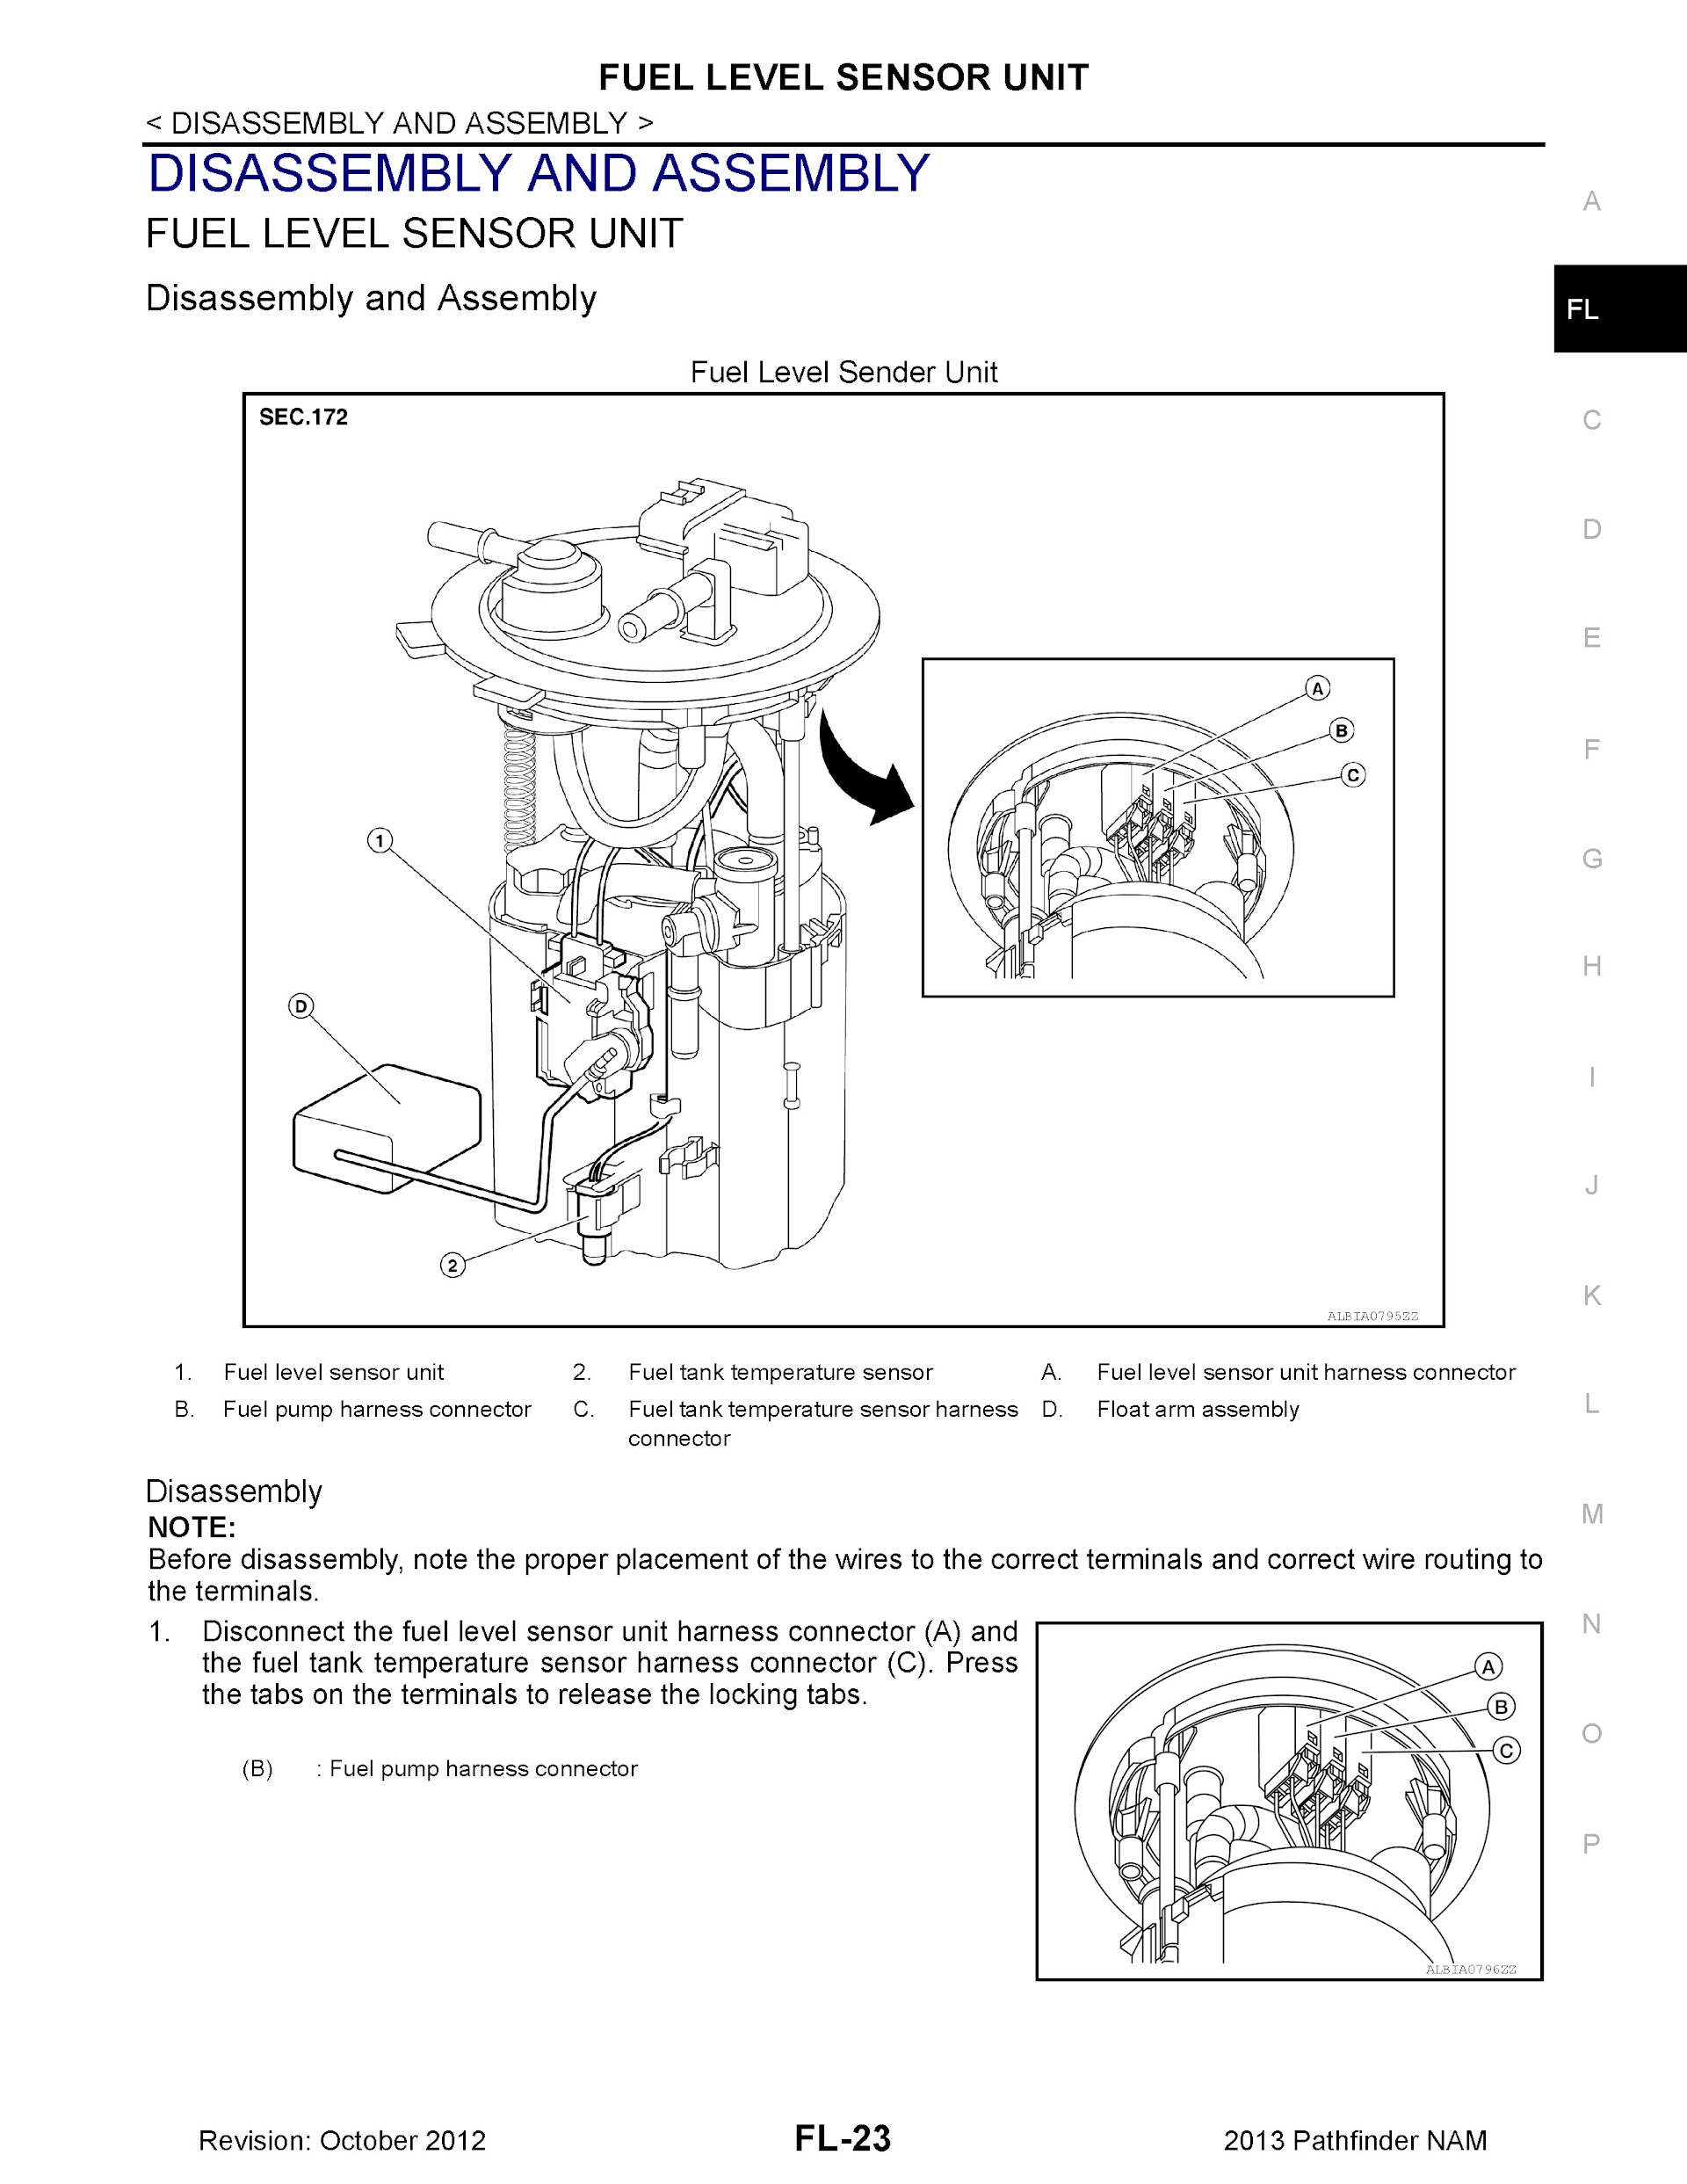 2013 Nissan Pathfinder Repair Manual, Fuel Level Sensor Unit